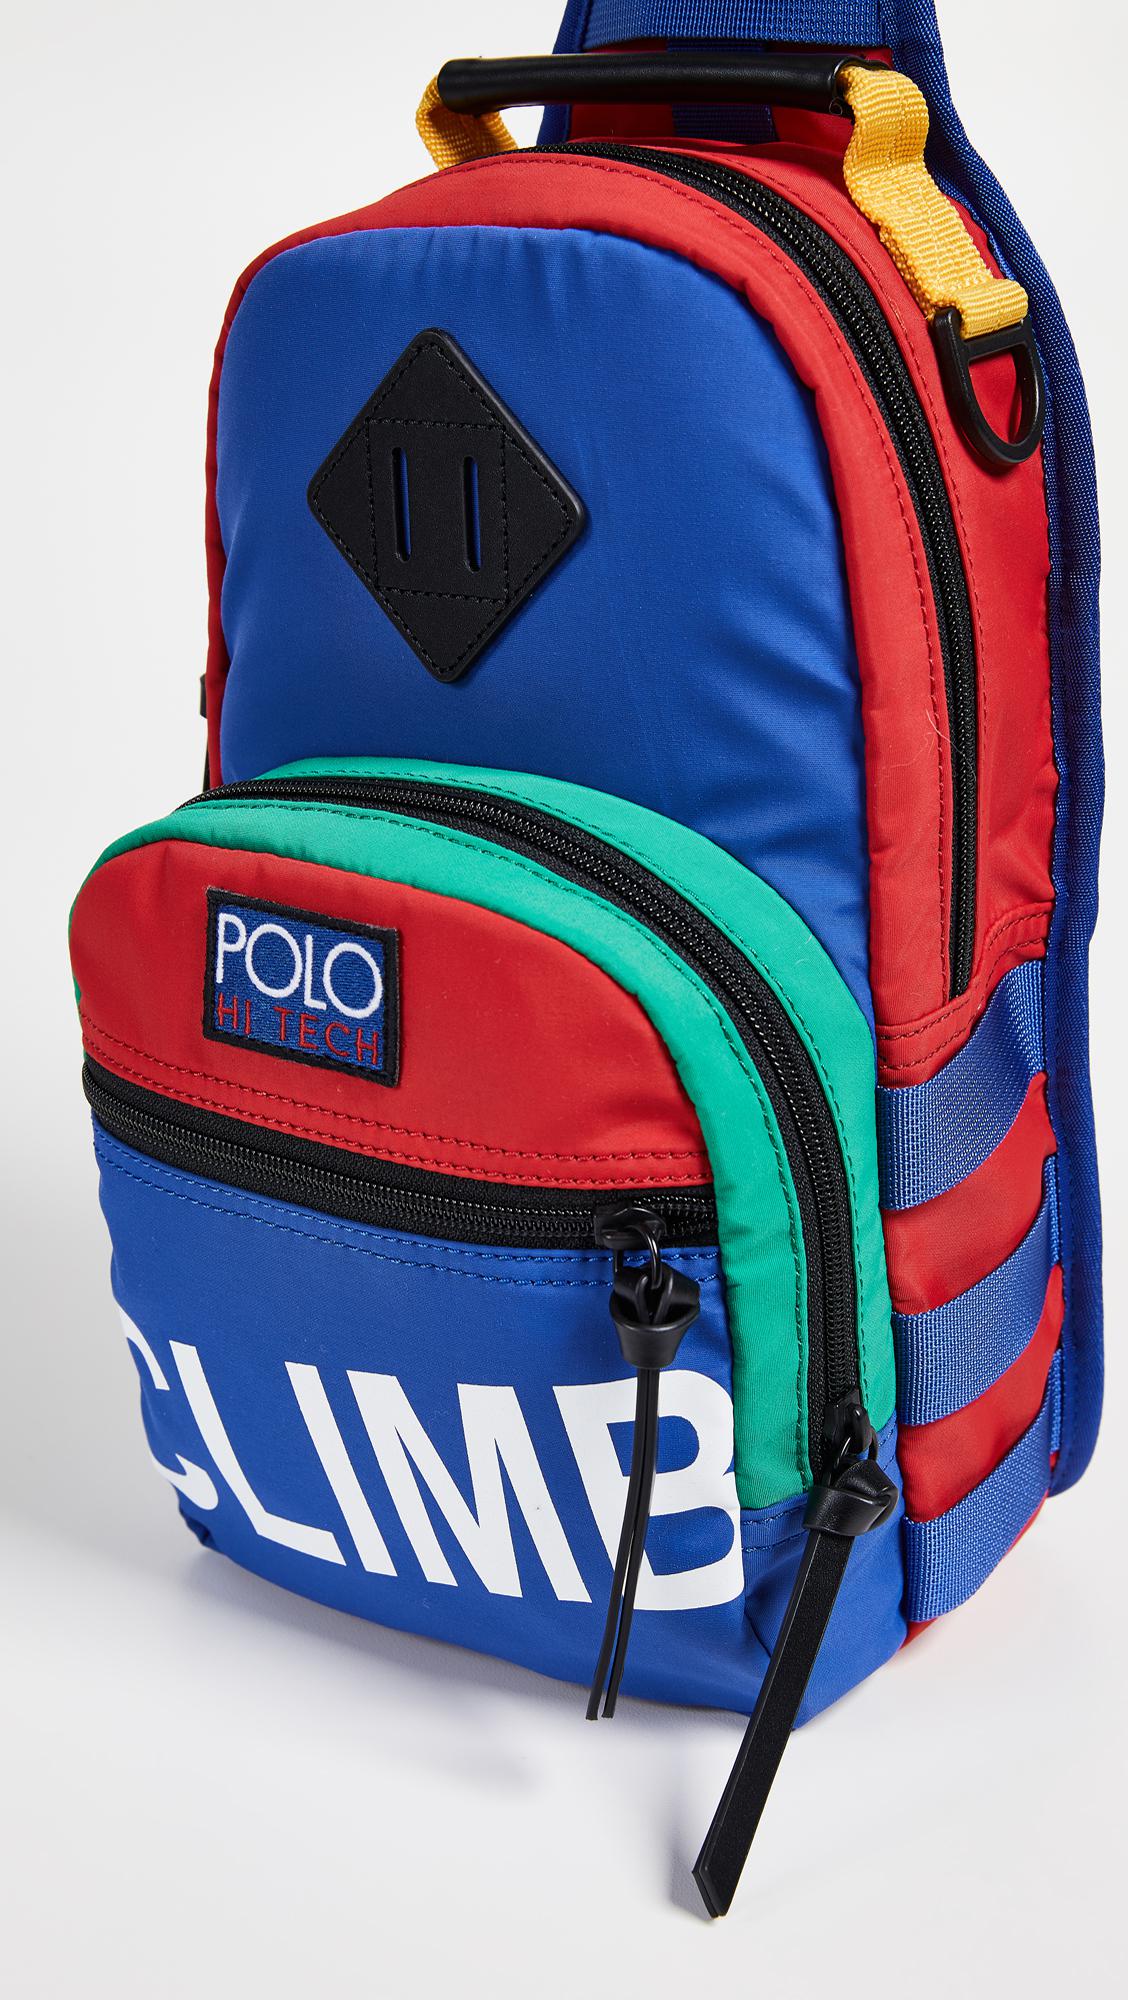 polo hi tech sling bag